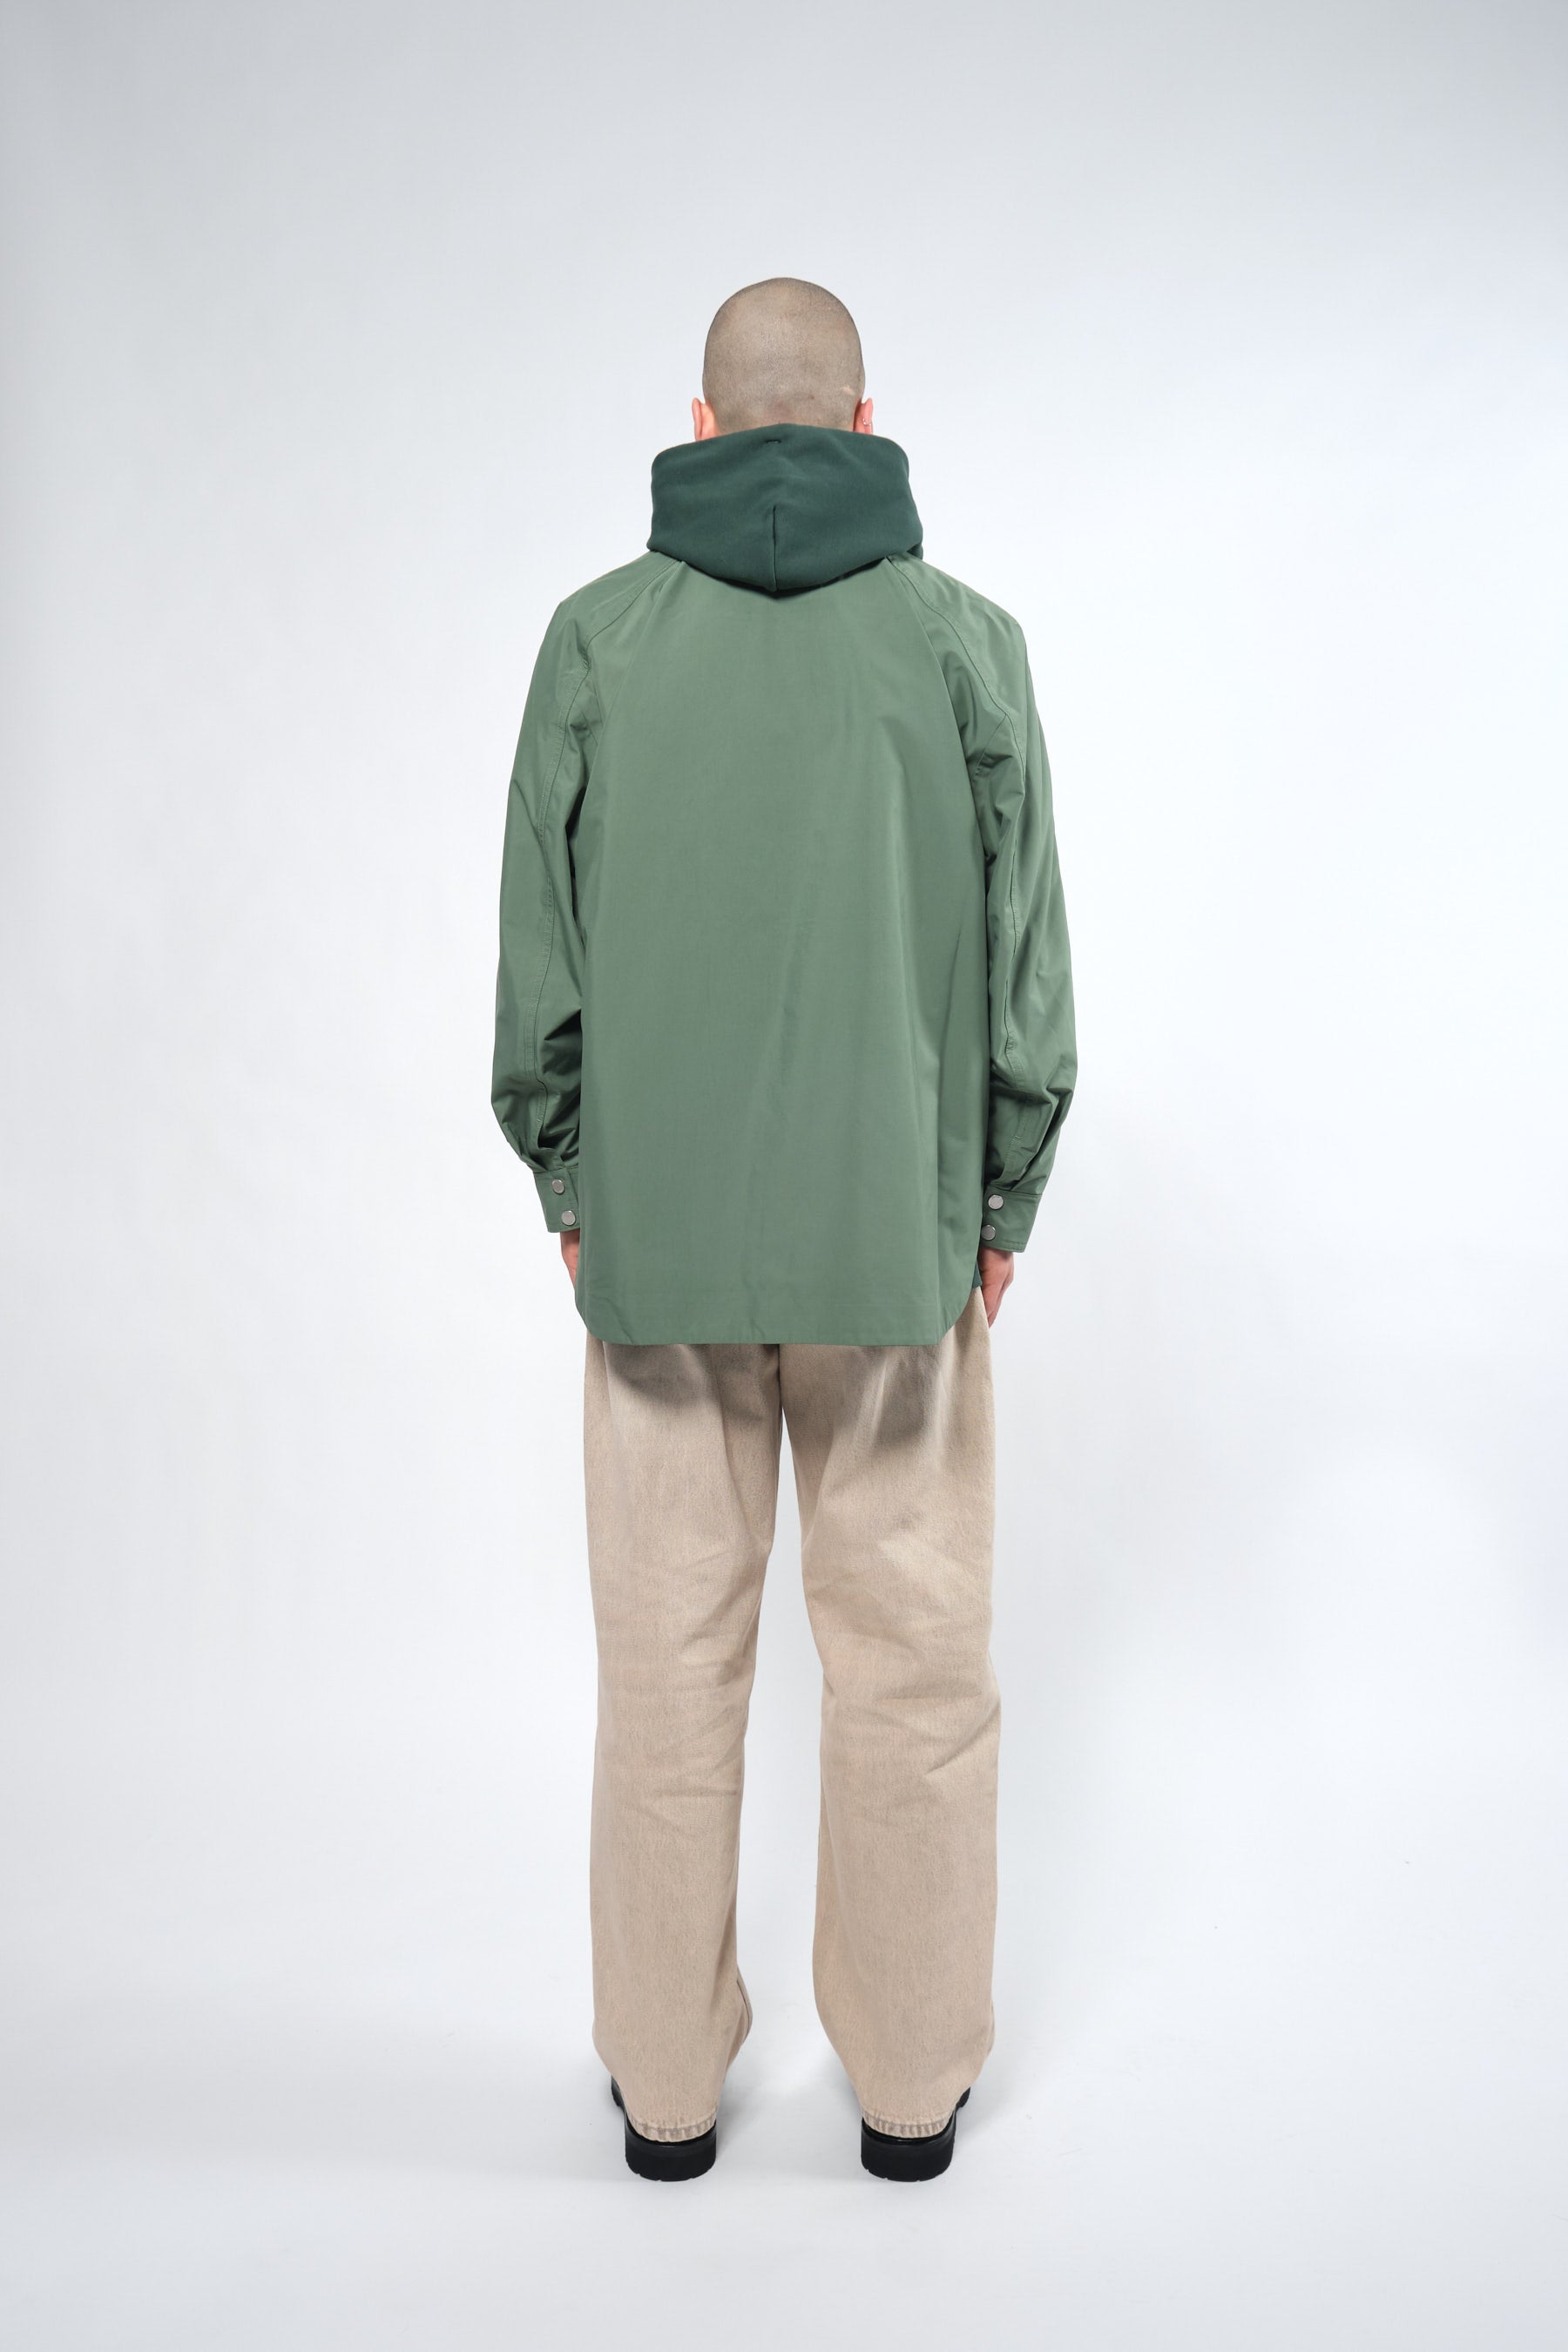  3L Green Waterproof Rain Jacket with Hood - Adhere To  - 7